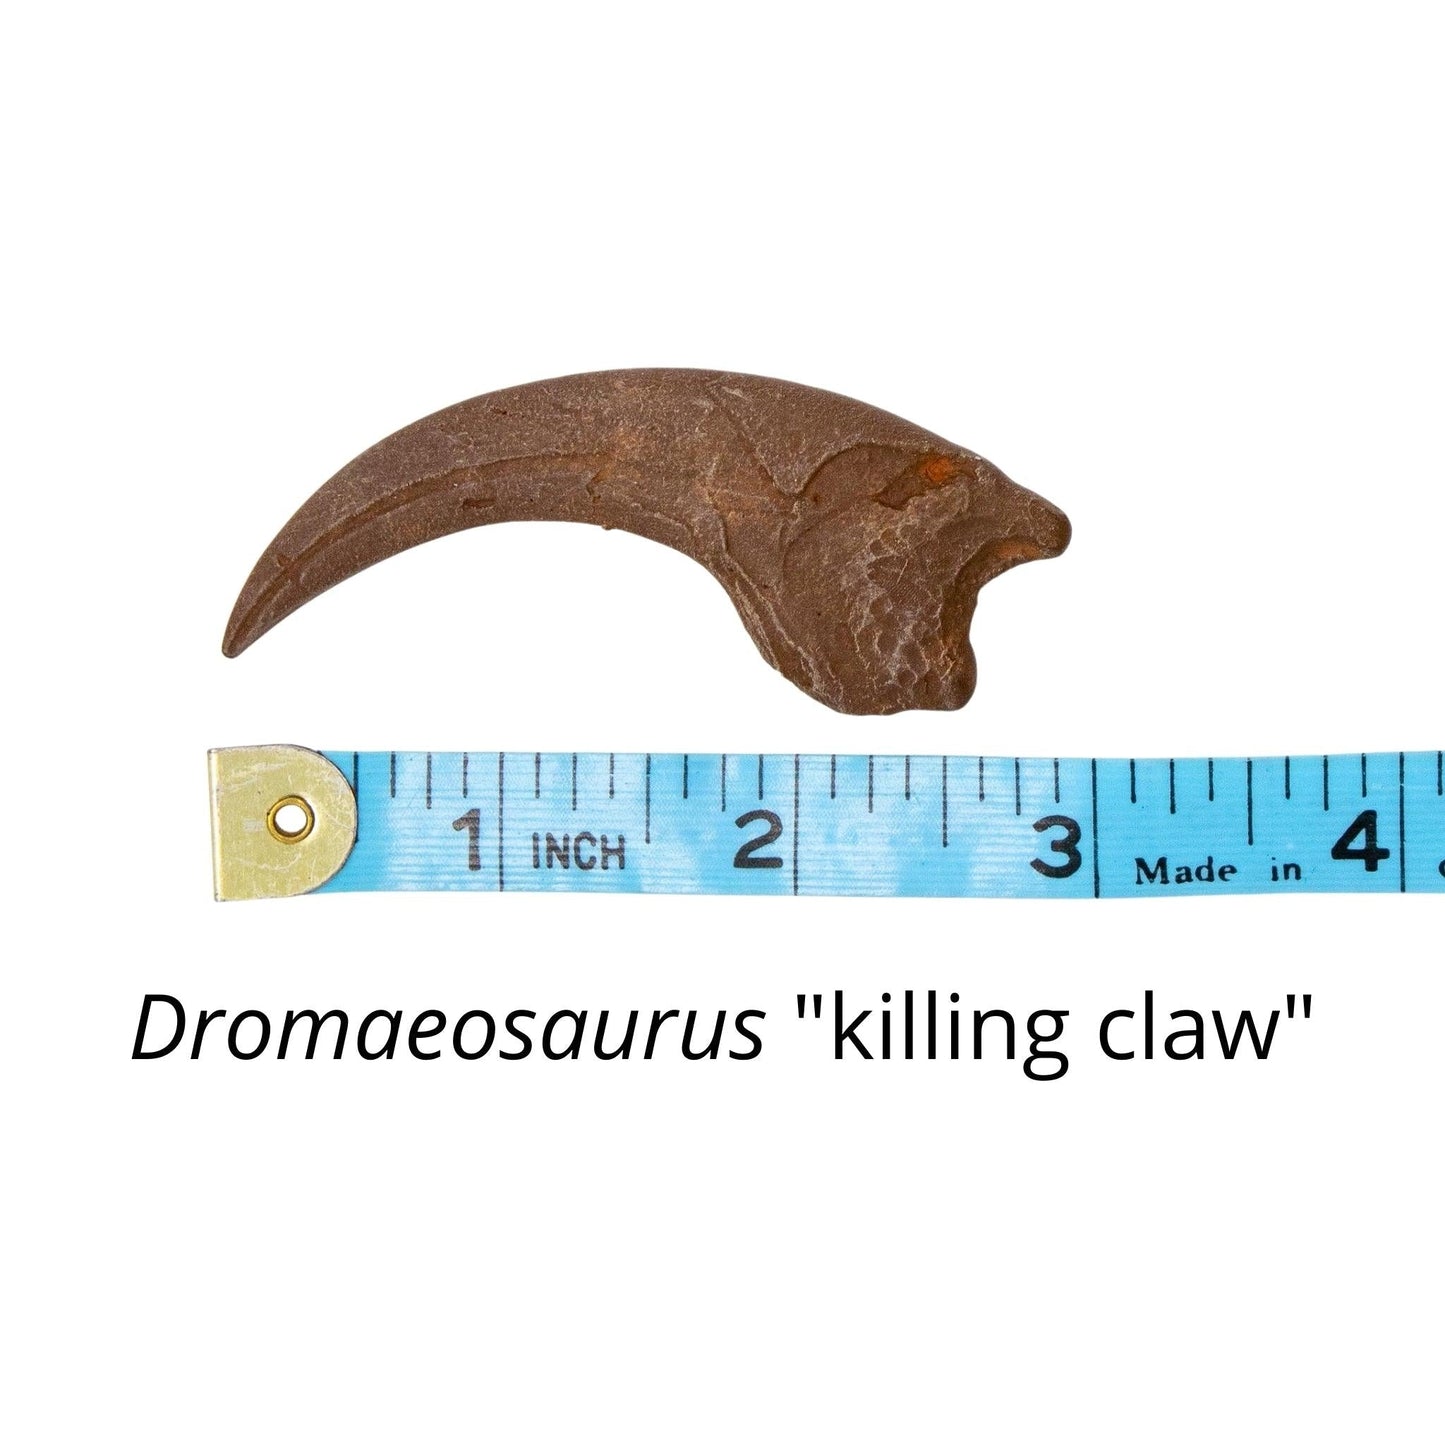 Dromaeosaurus killing claw measured against ruler